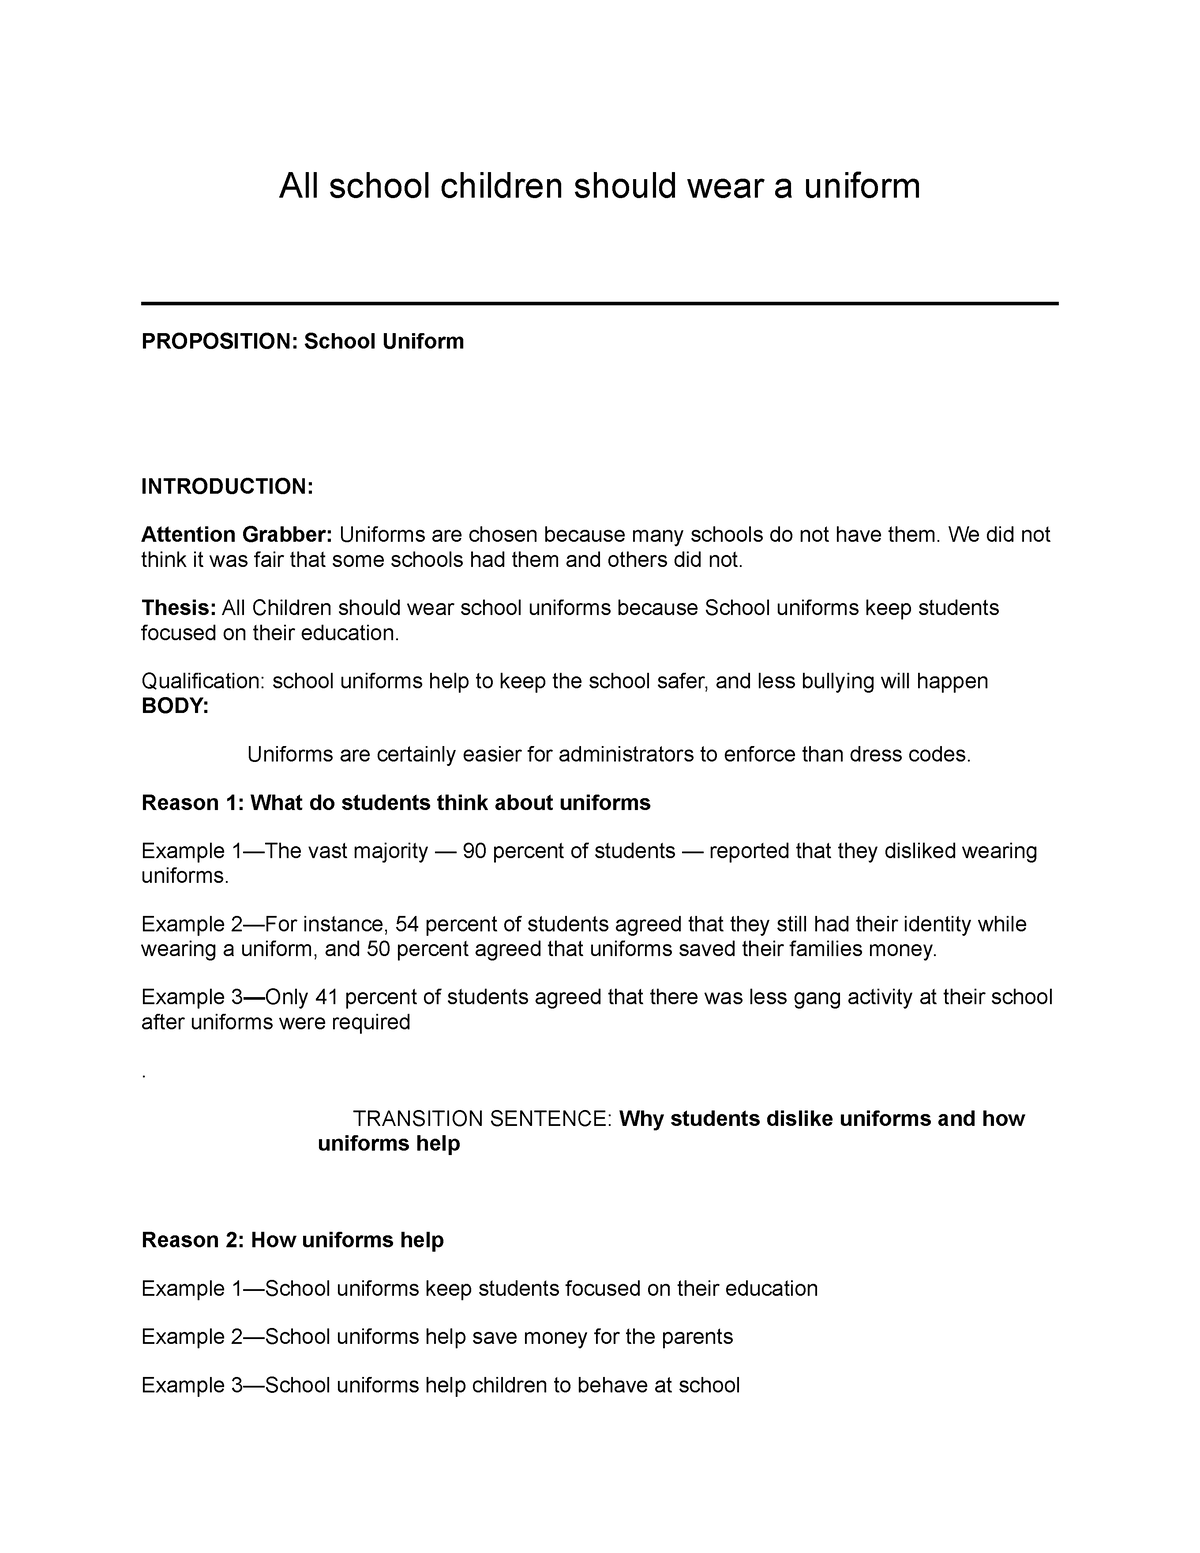 persuasive speech outline about school uniforms